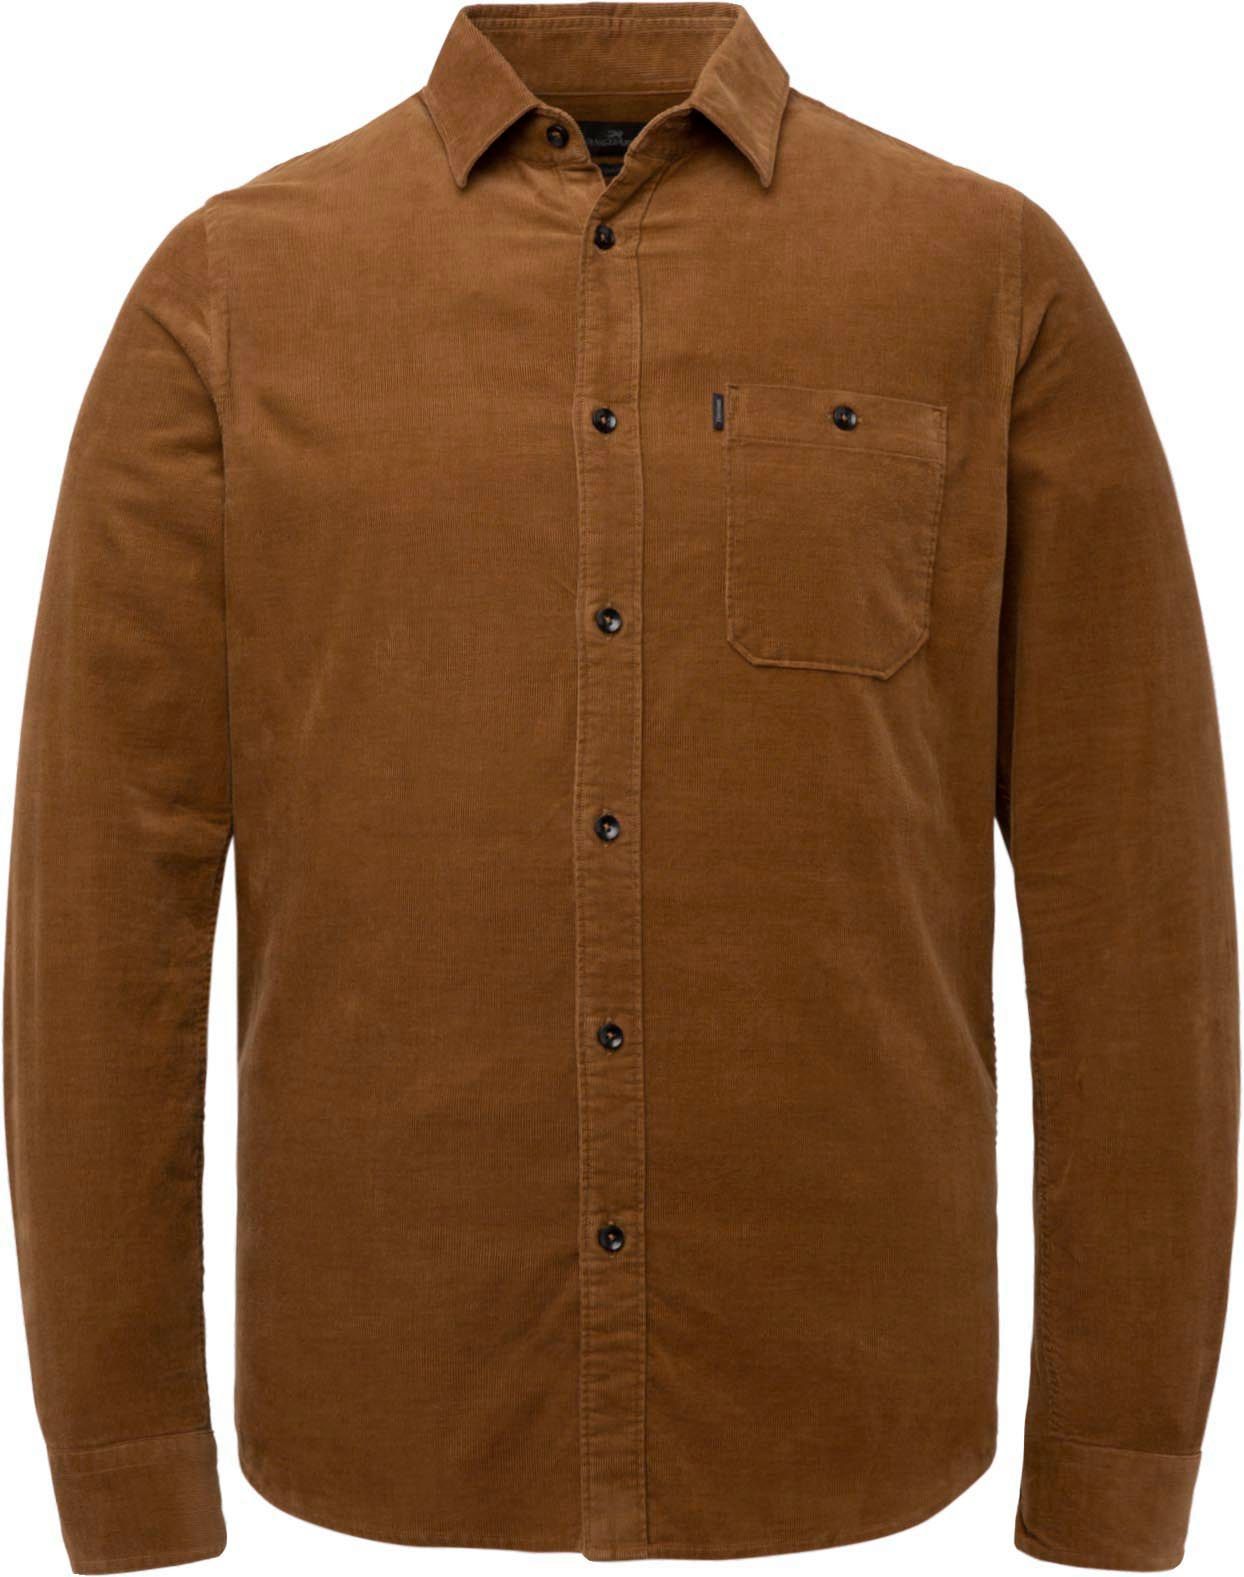 Vanguard Shirt Corduroy Brown size XXL